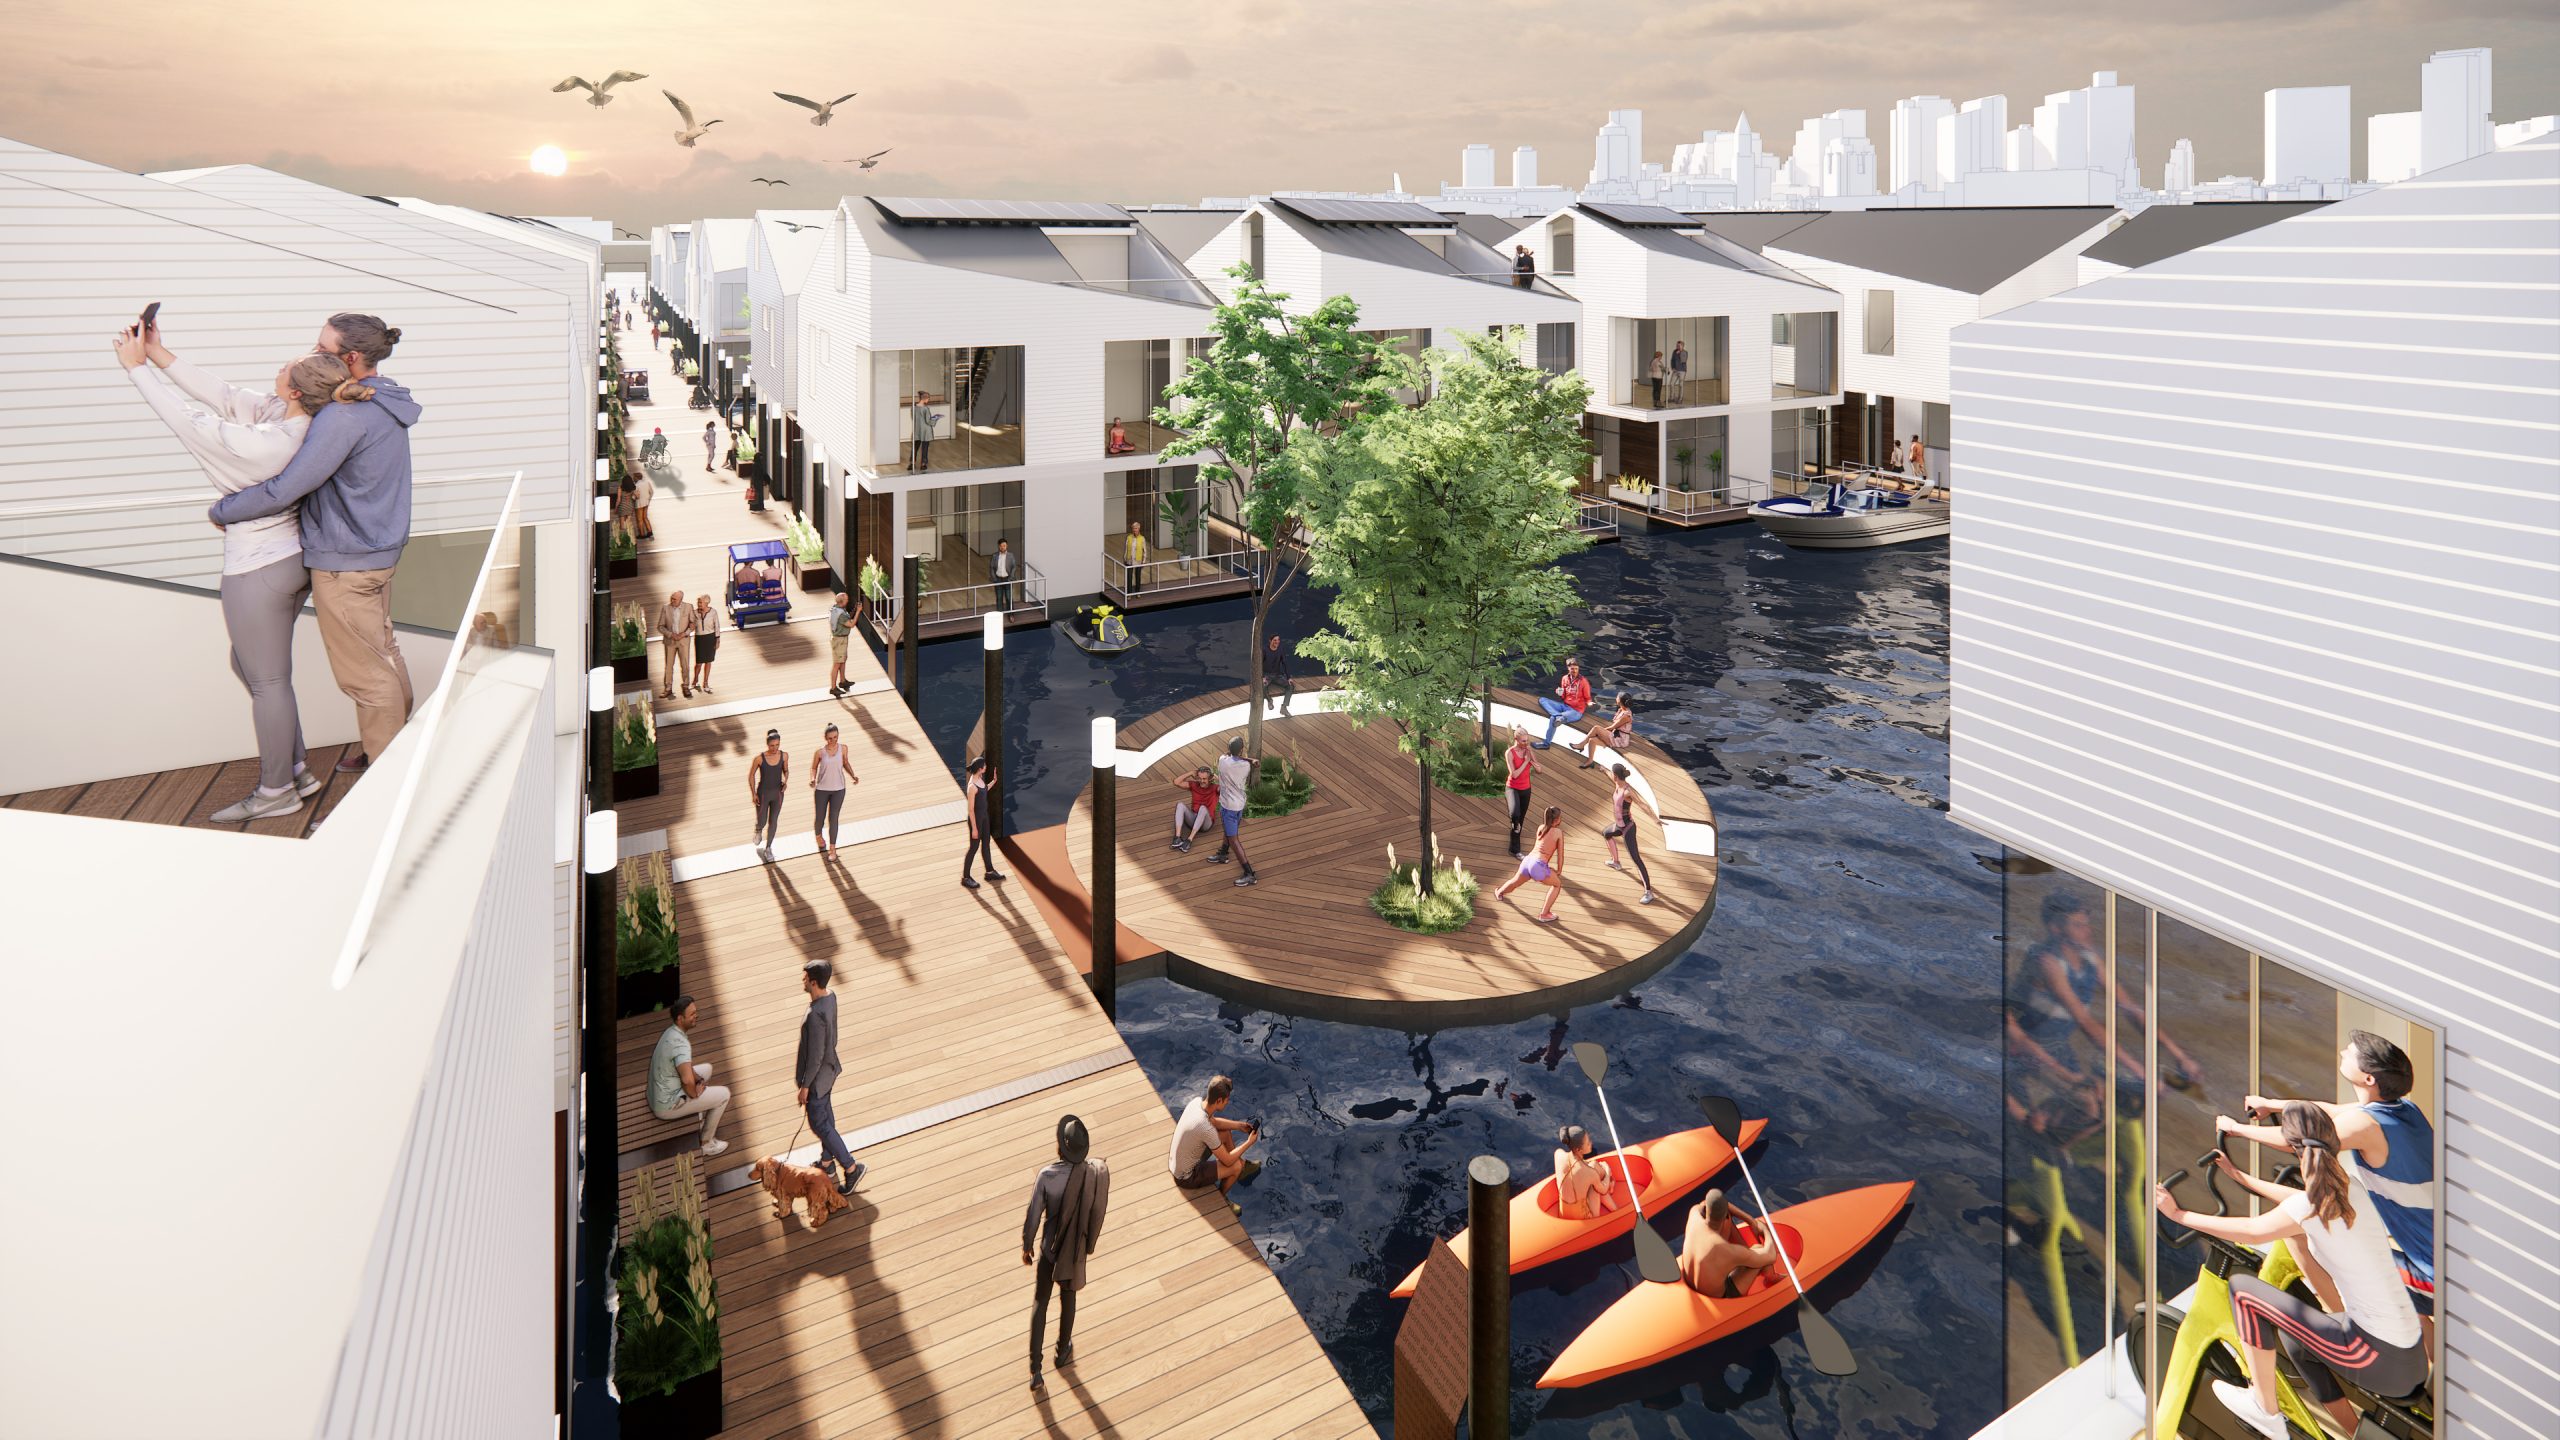 NAVY BLUE: A Pier 5 redevelopment proposal